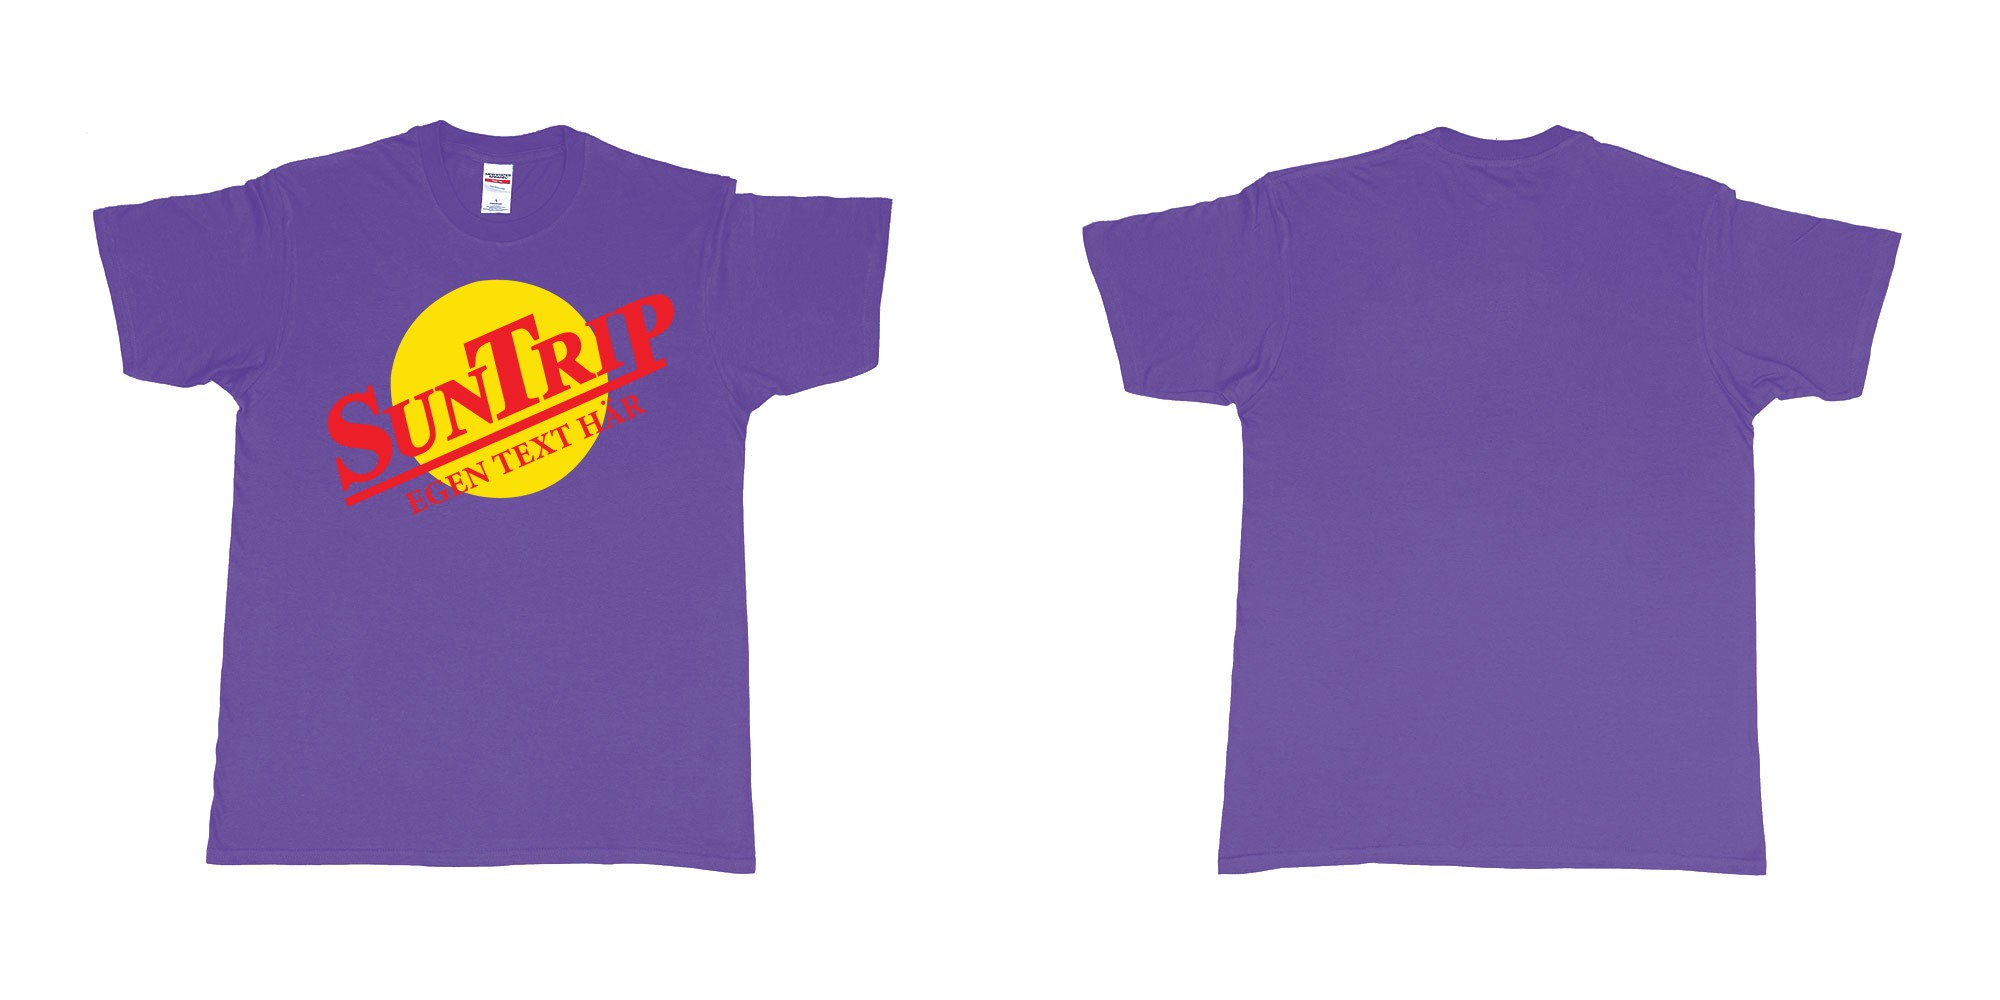 Custom tshirt design sallskapsresan suntrip eget tshirt tryck bali resa in fabric color purple choice your own text made in Bali by The Pirate Way